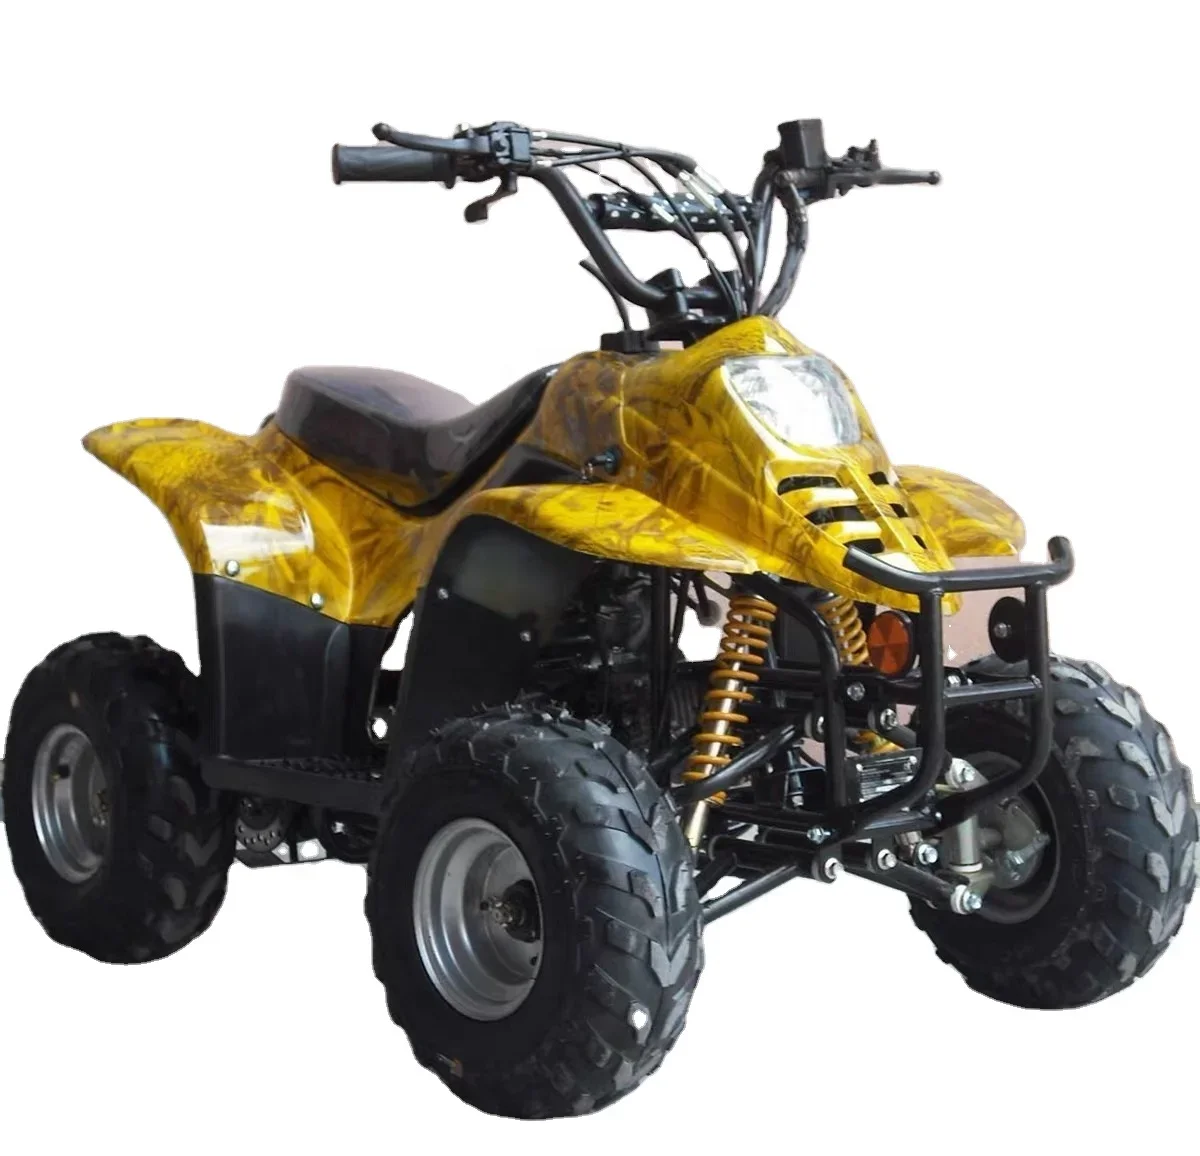 Mini Quad Atvs for Kids Hot Sale Newest 110CC Electric Start Automatic Chain Drive ATV